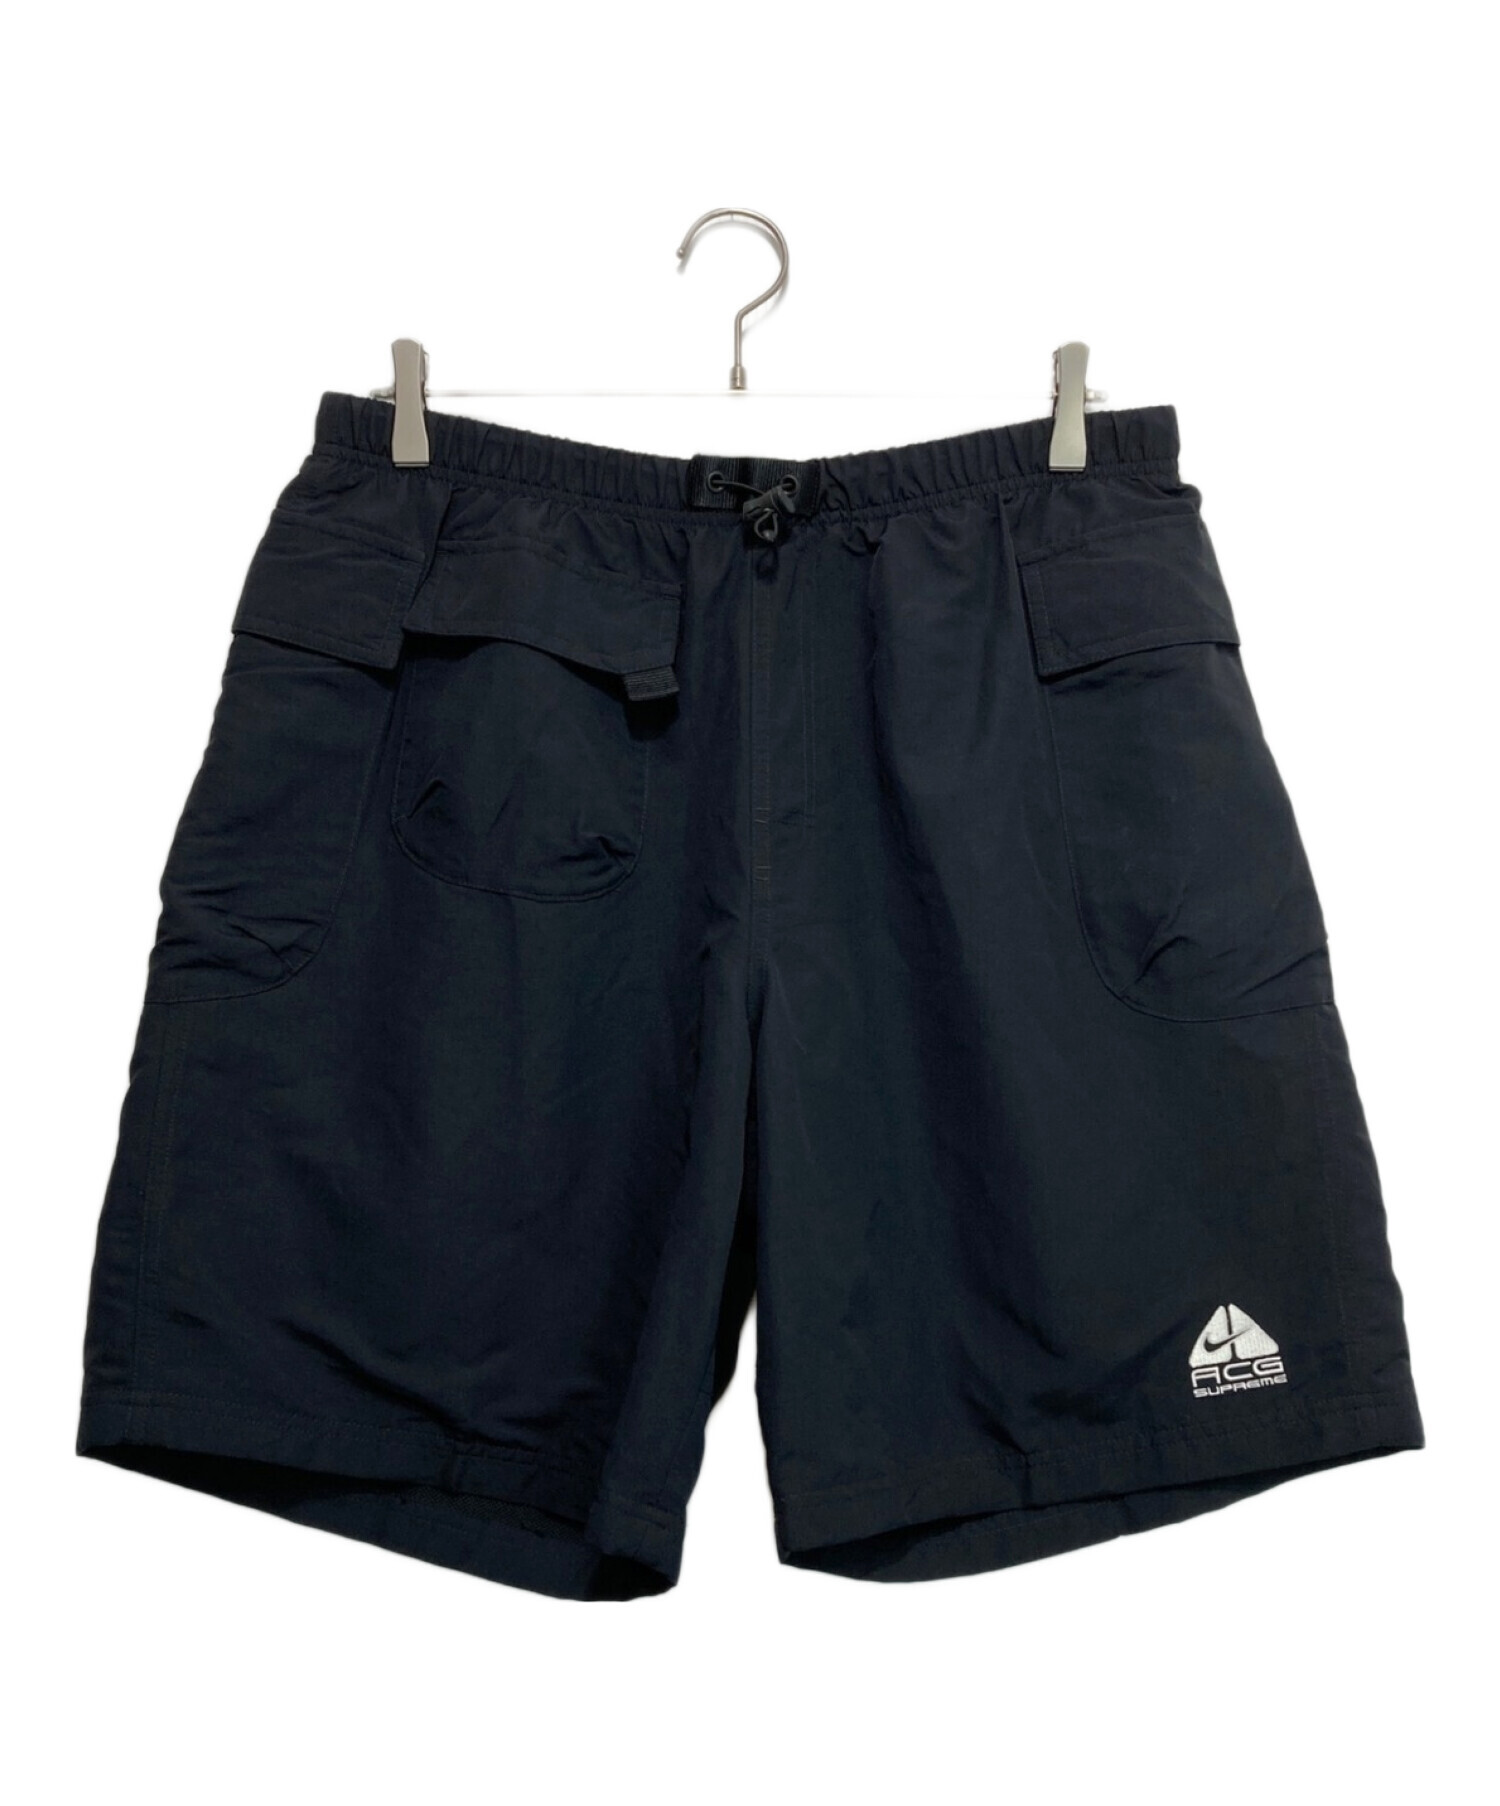 Supreme (シュプリーム) NIKE ACG (ナイキエージーシー) ACG Nylon Trail Shorts ブラック サイズ:L